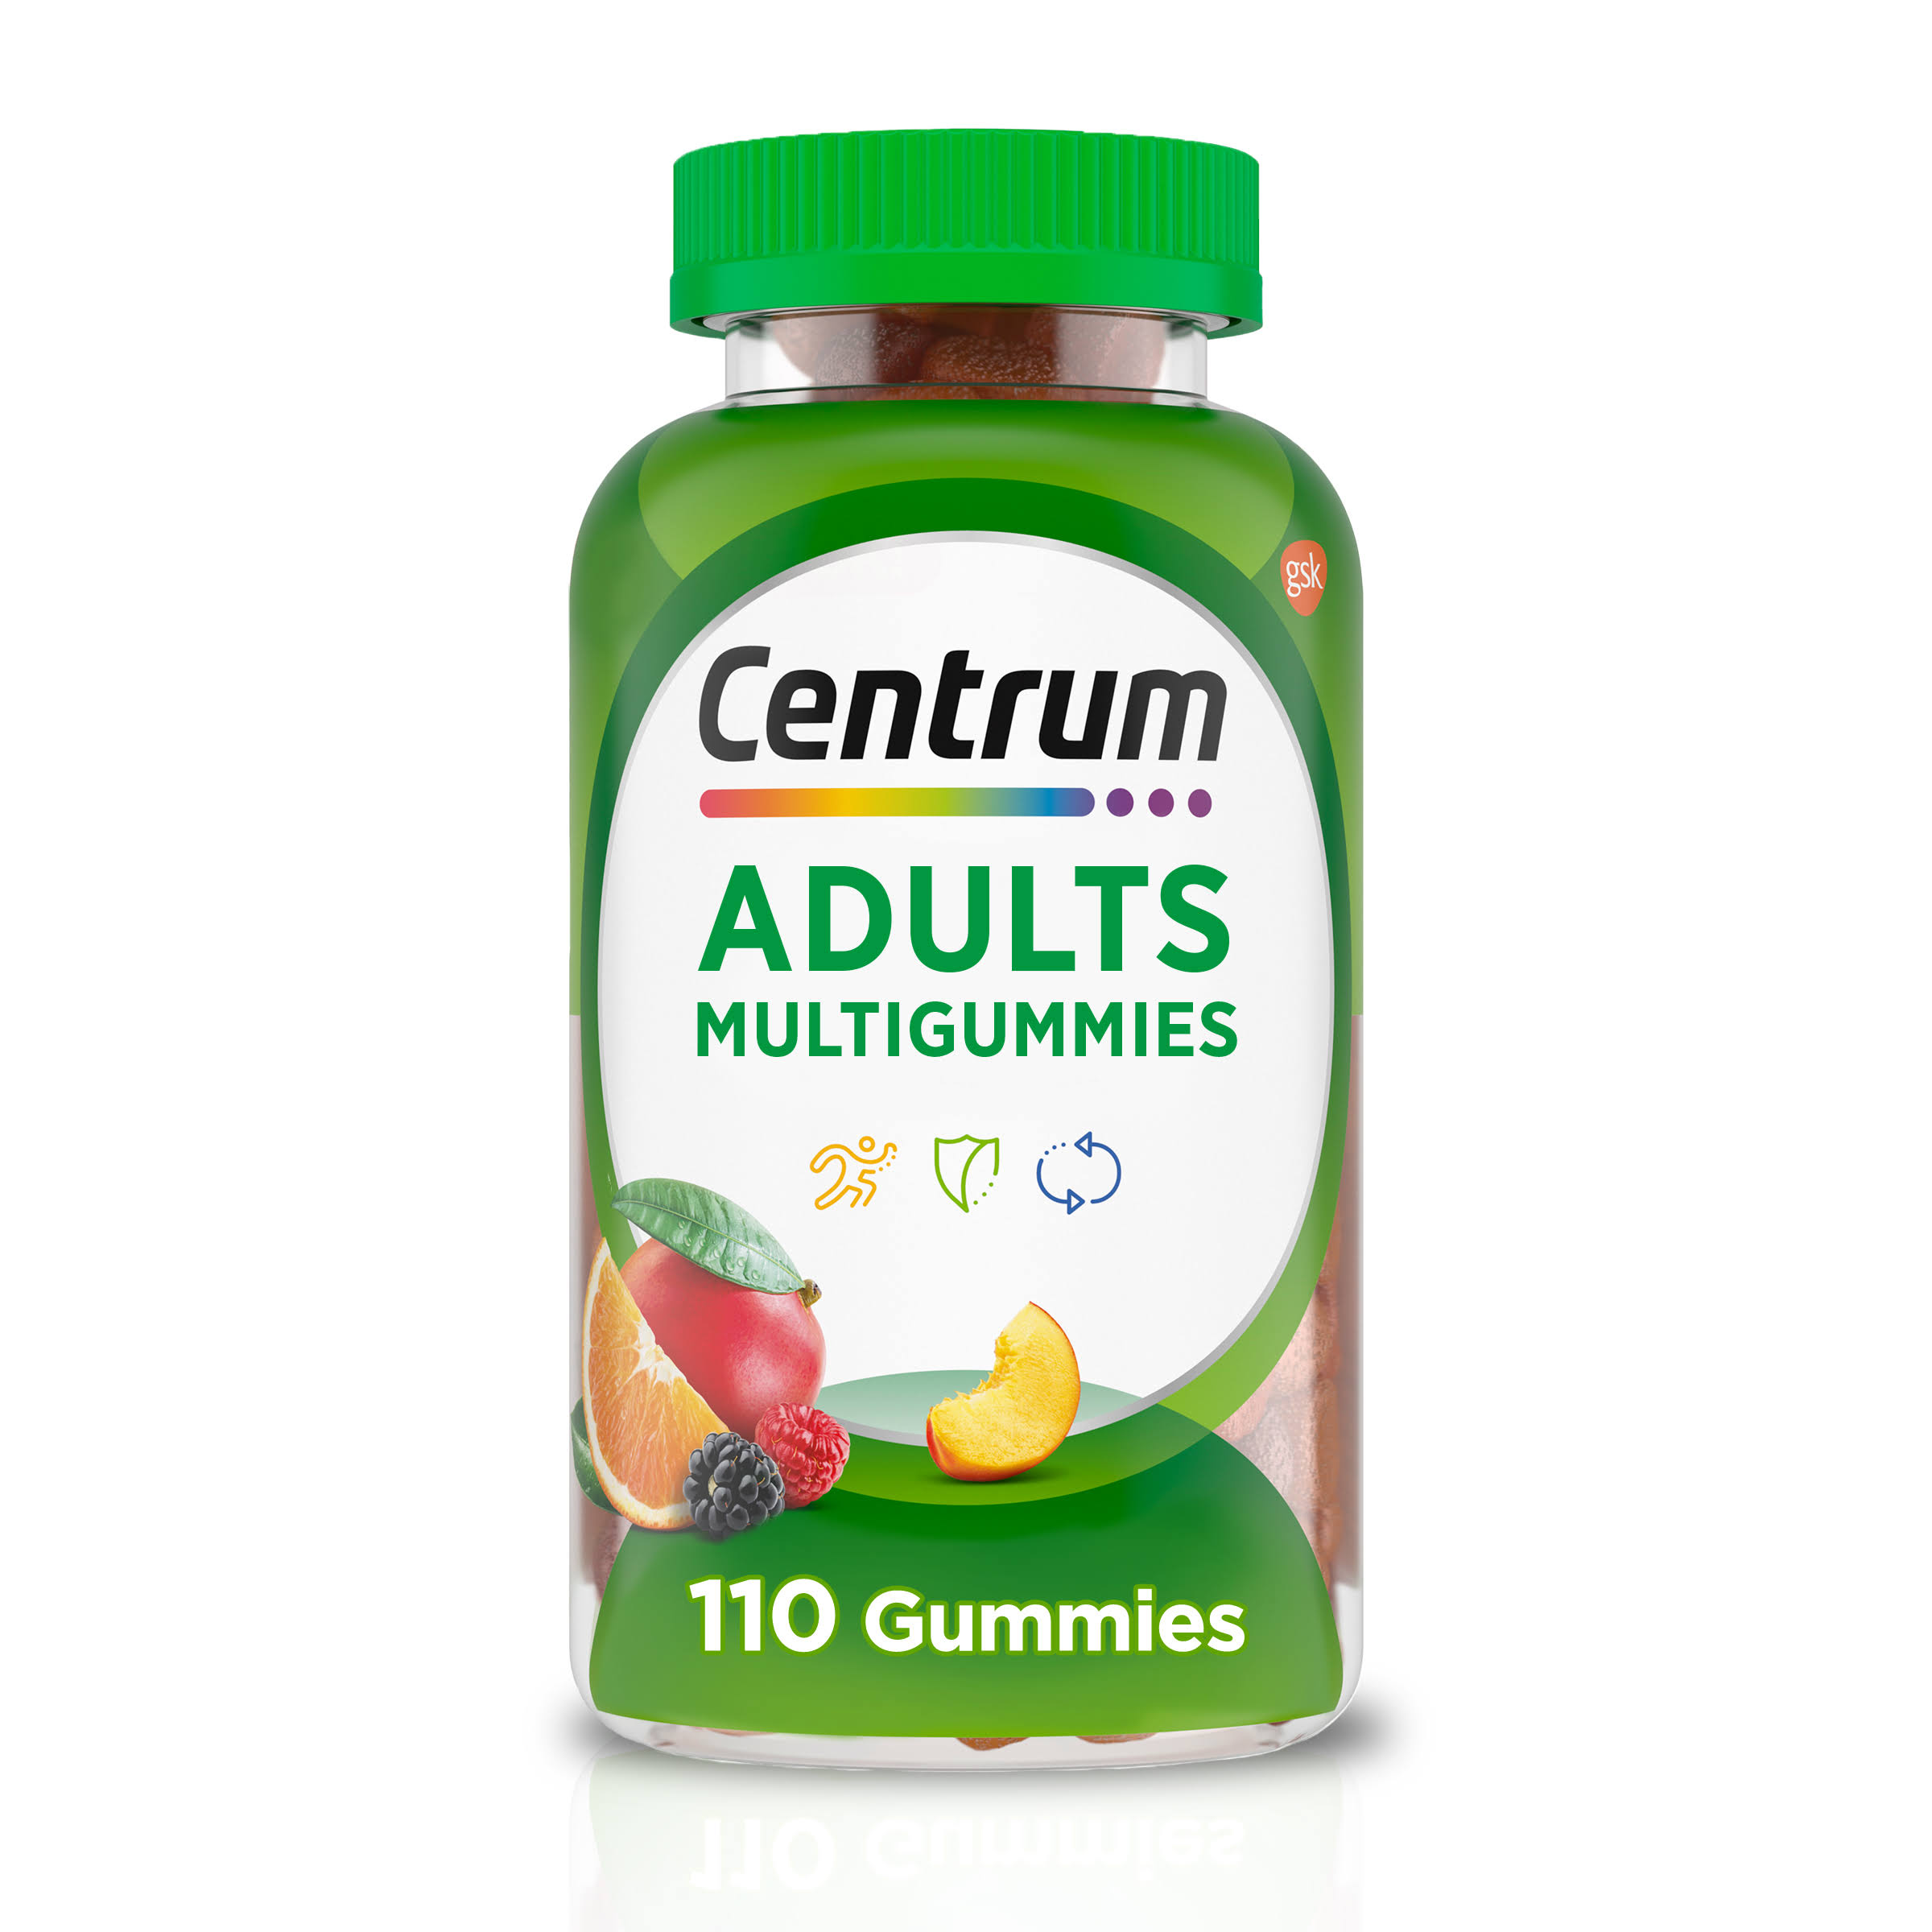 Centrum Multigummies, Adult, Assorted Natural Fruit Flavors - 110 gummies